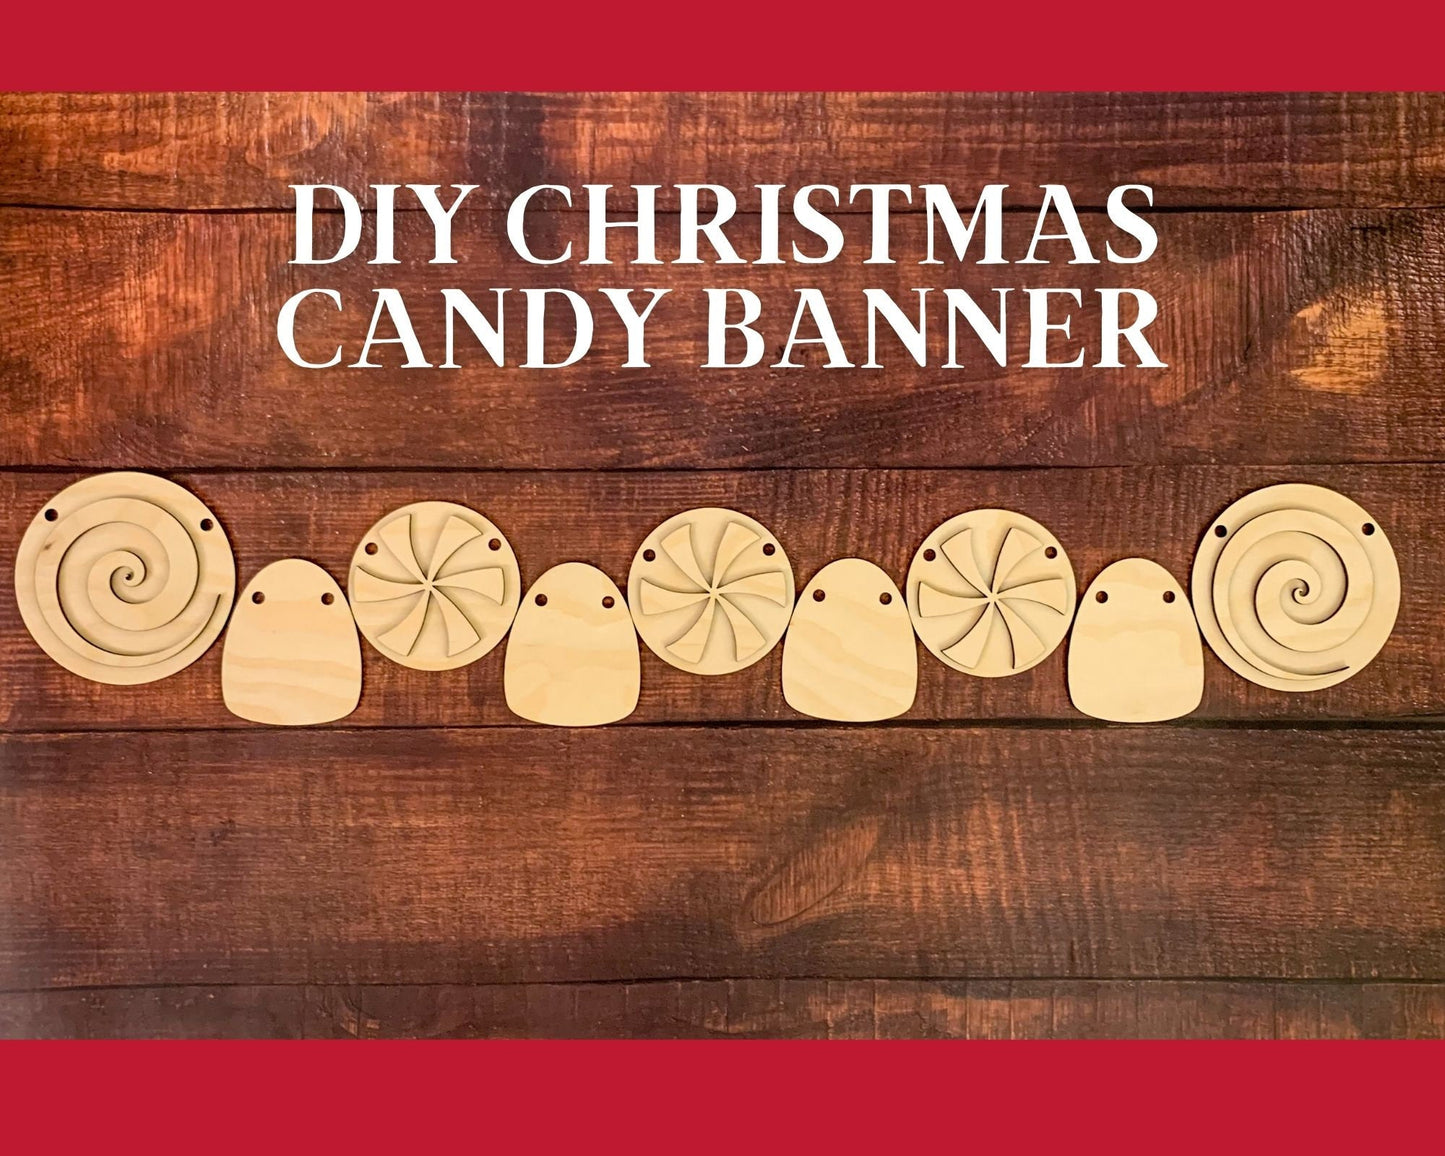 Christmas Candy Banner - DIY Kit - Craft Kit - Mantel Decor - Gingerbread Decorations - Wood Blanks